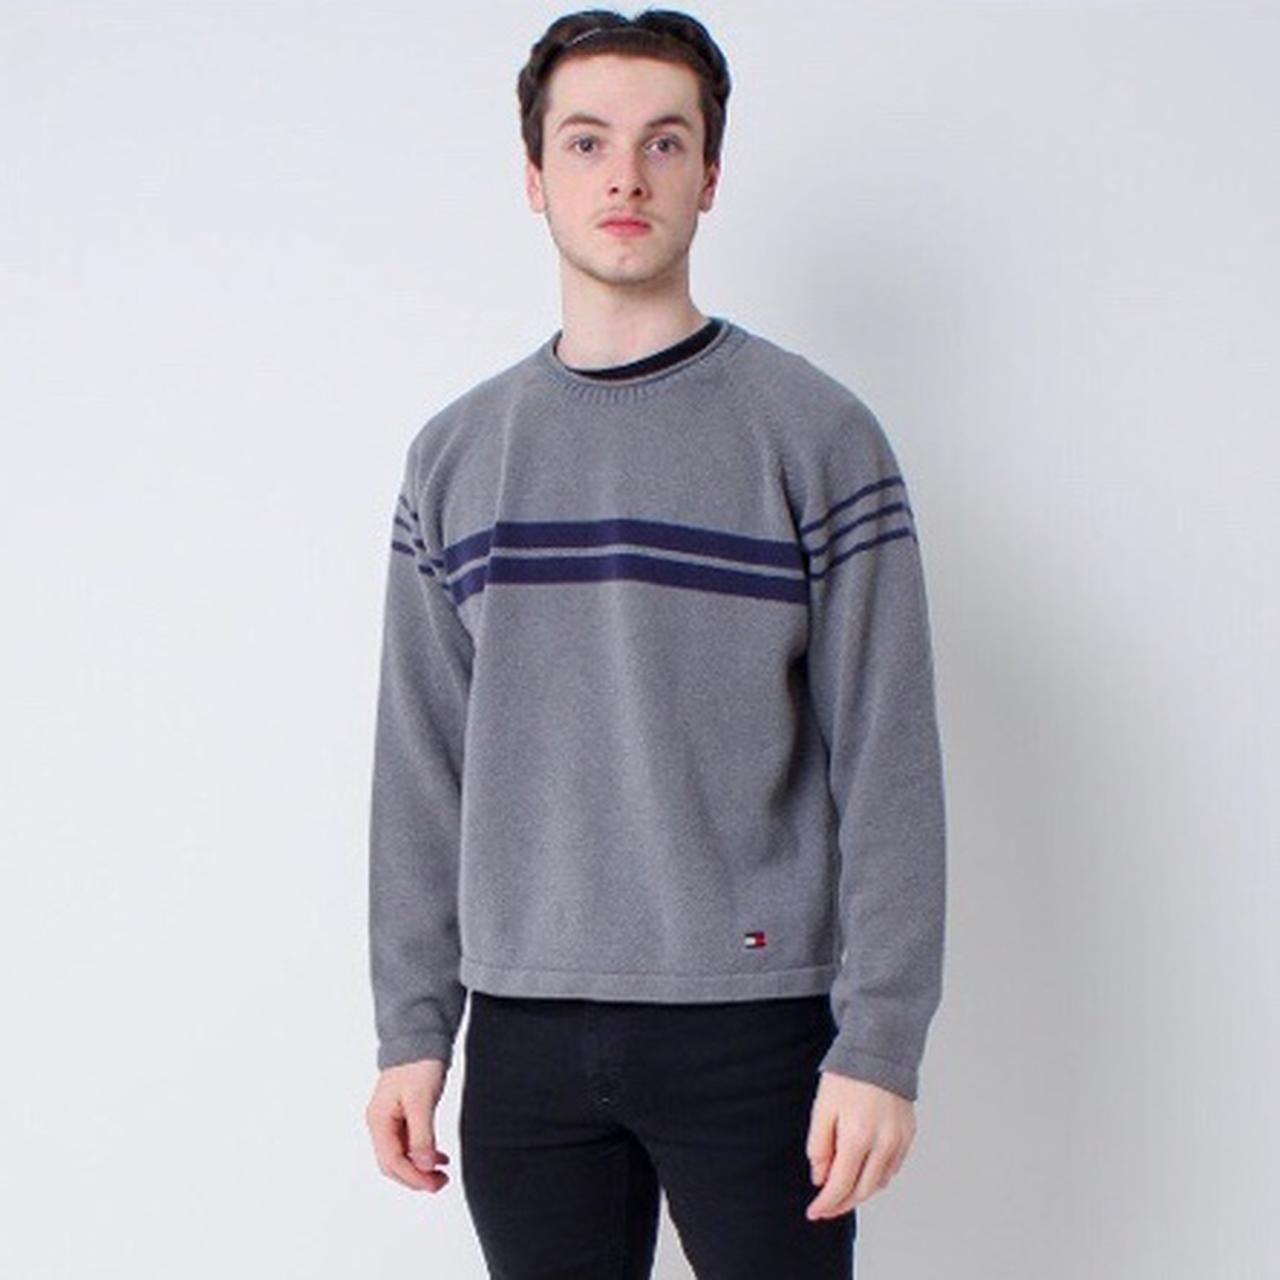 🔥Tommy hilfiger grey jumper sweater with navy blue... - Depop